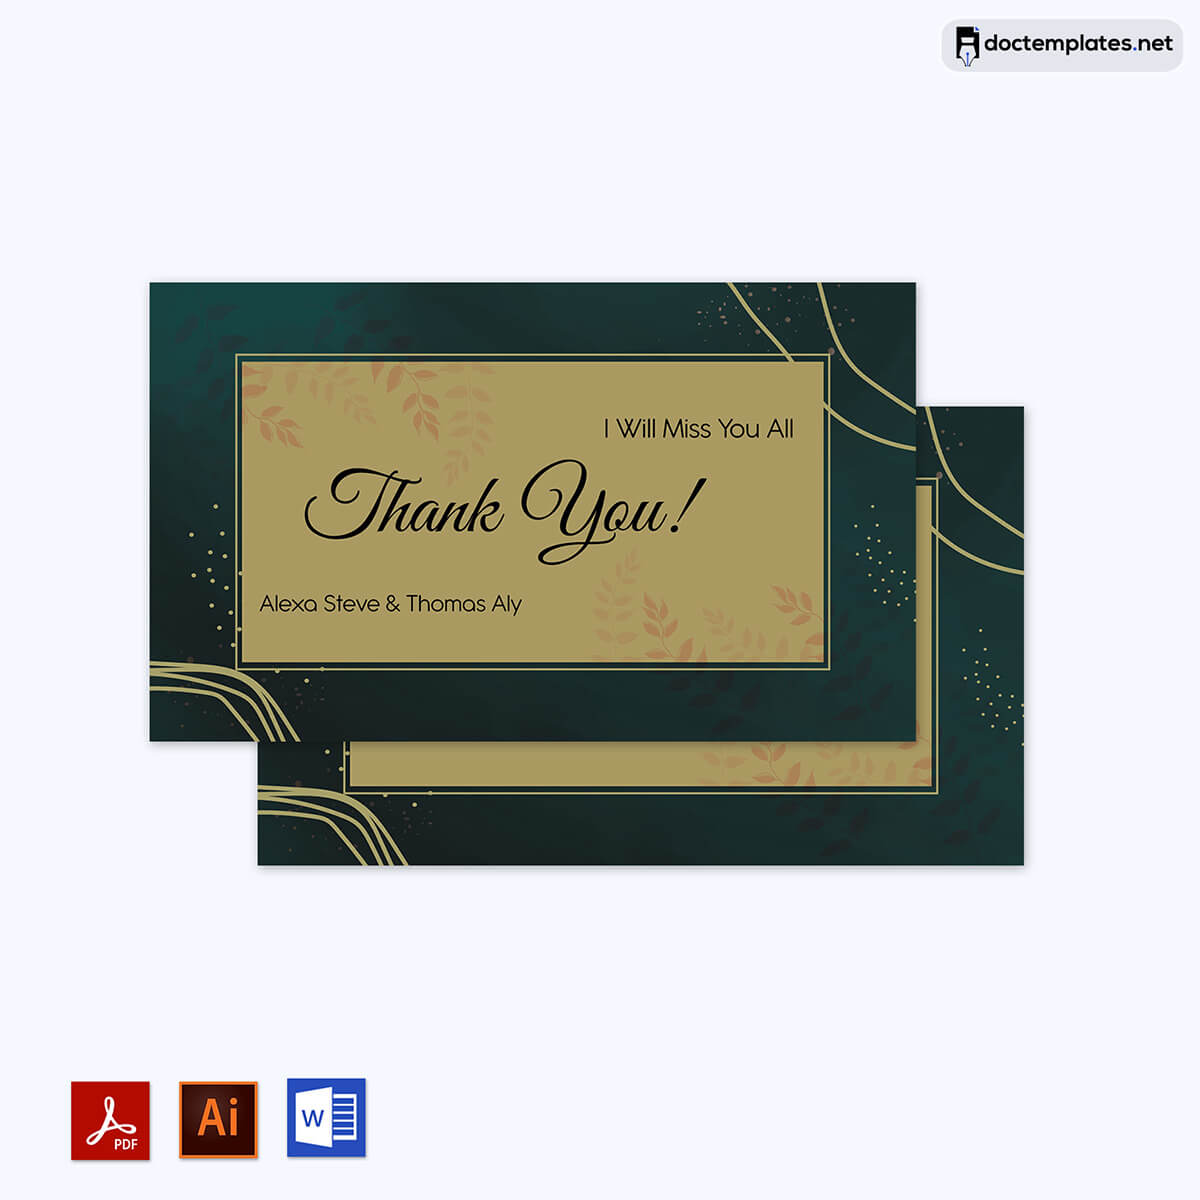 Image of Thank you card design ideas
Thank you card design ideas
